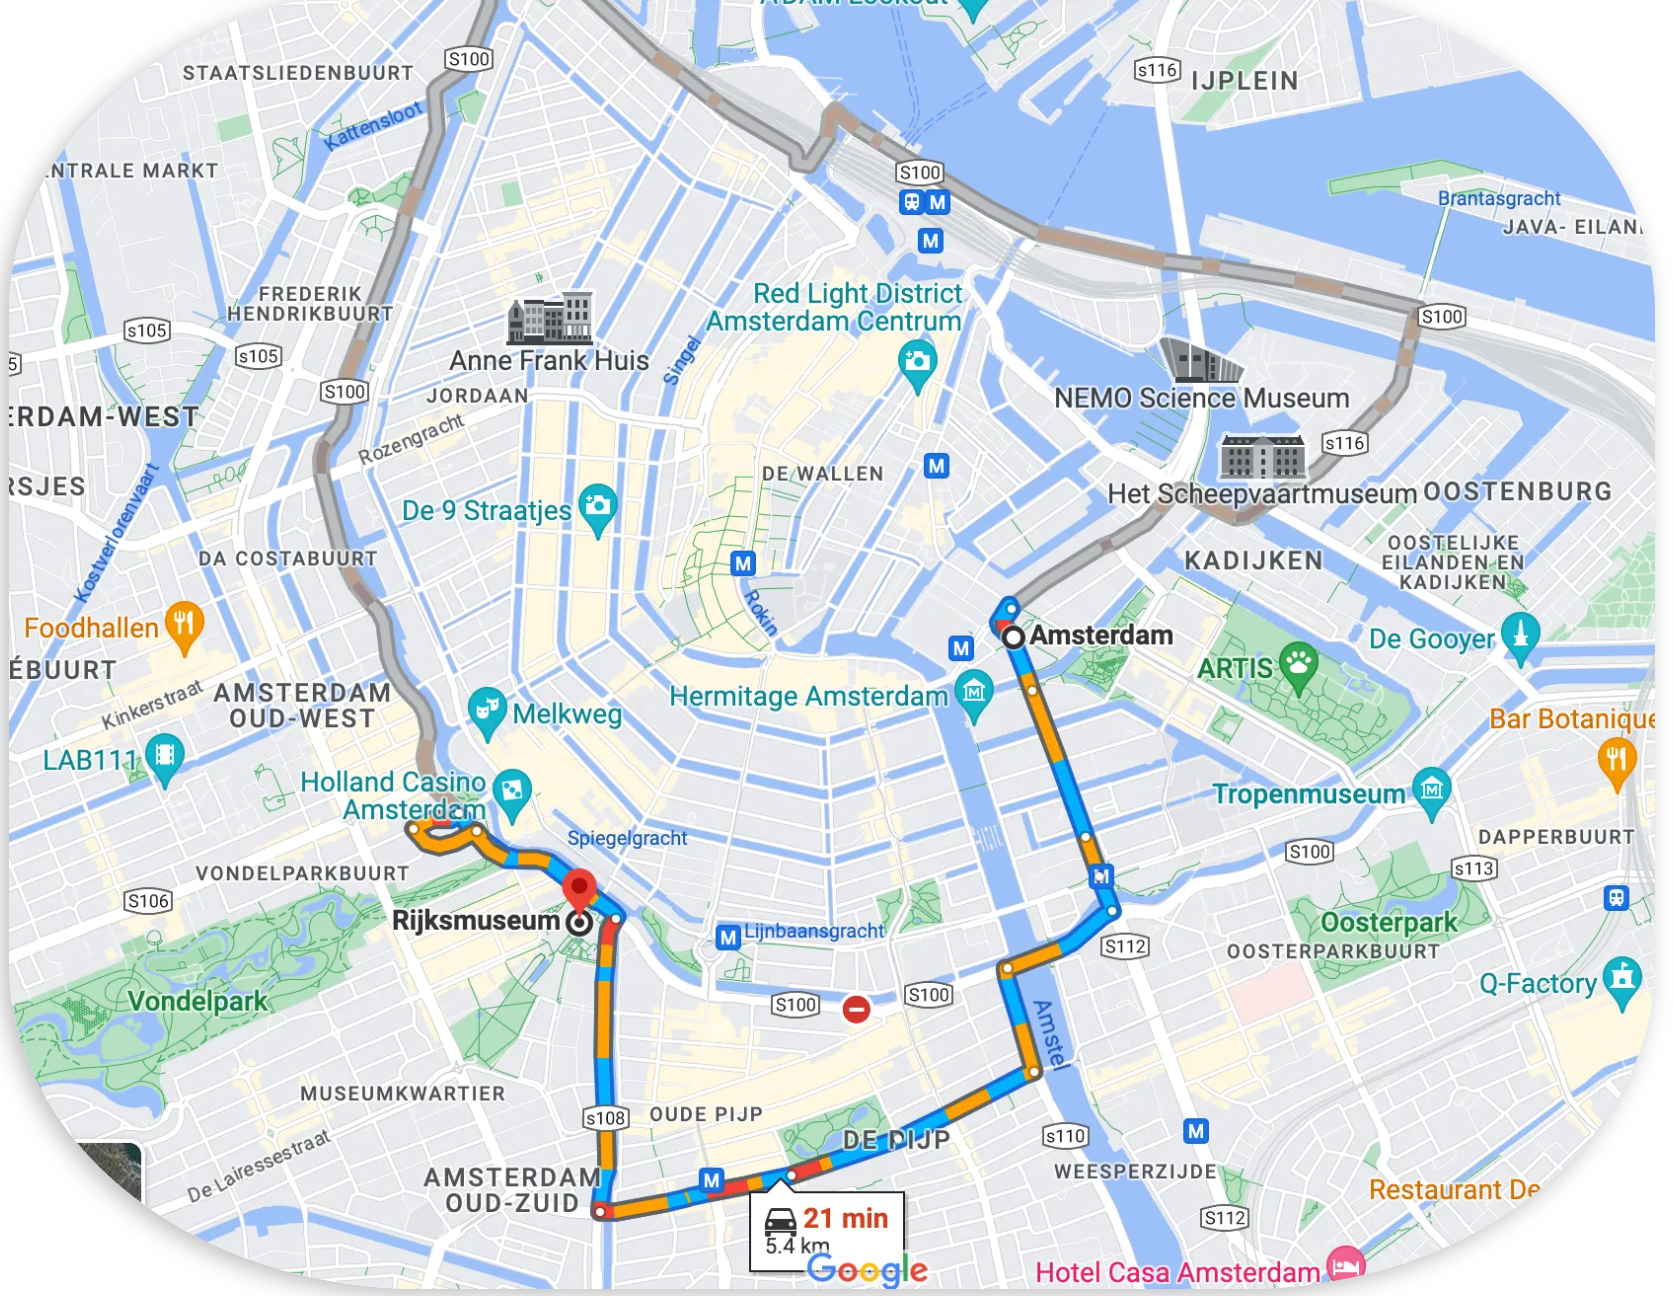 Directions to Rijksmuseum